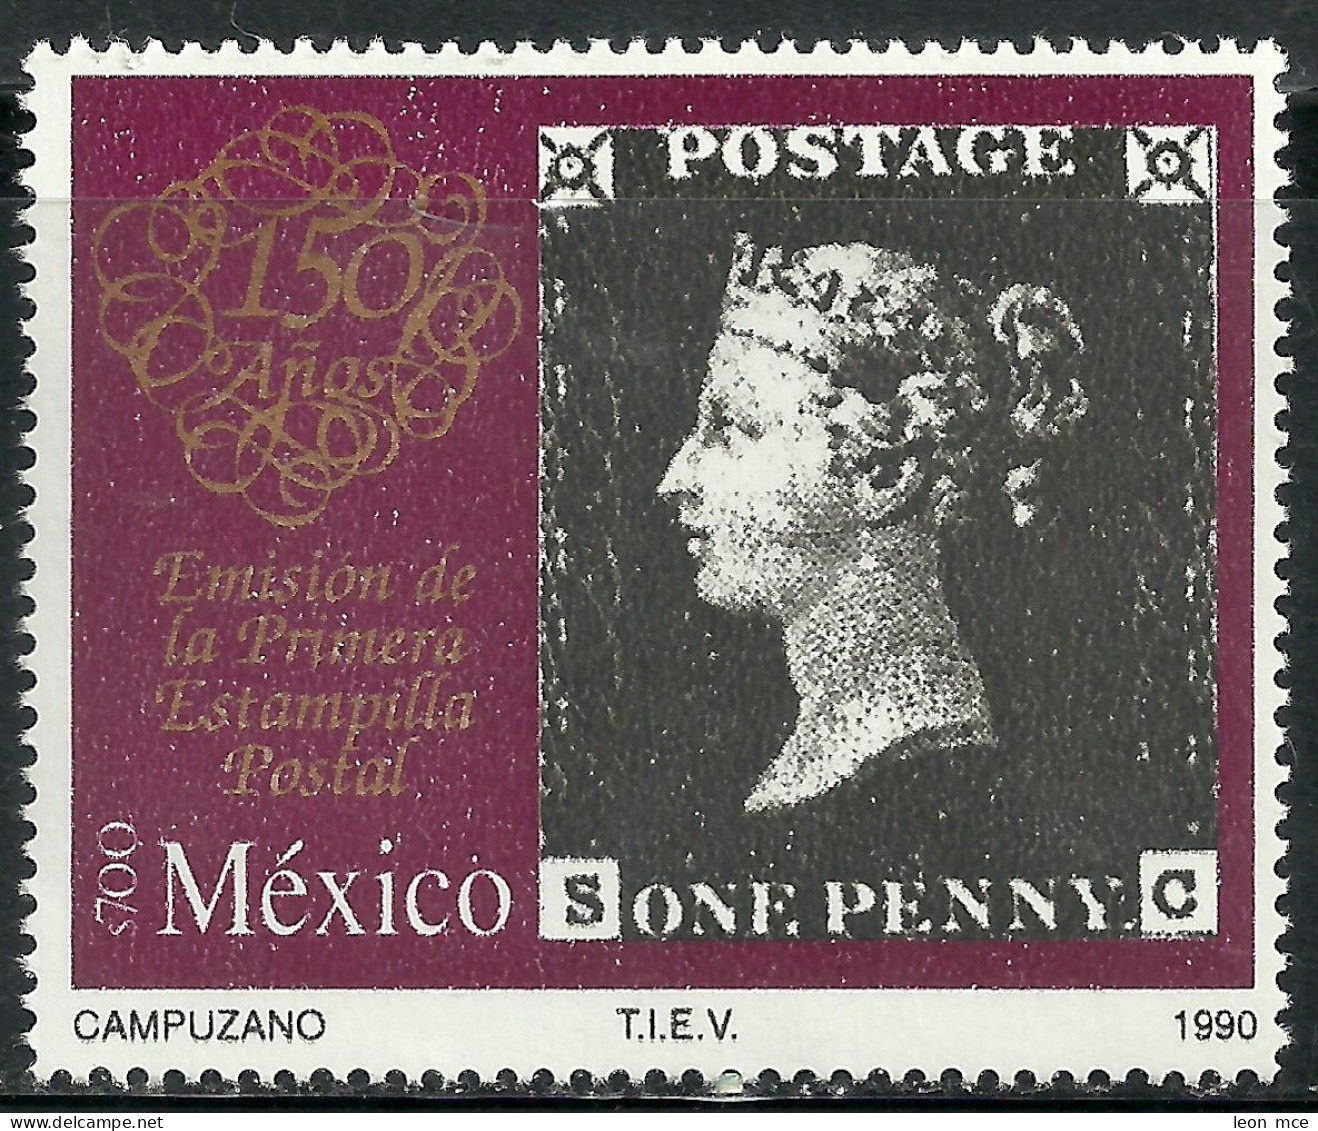 1990 MÉXICO PRIMERA ESTAMPILLA POSTAL ONE PENNY Sc. 1645 MNH FIRST POSTAGE STAMPS 150th. ANNIV. - Mexiko